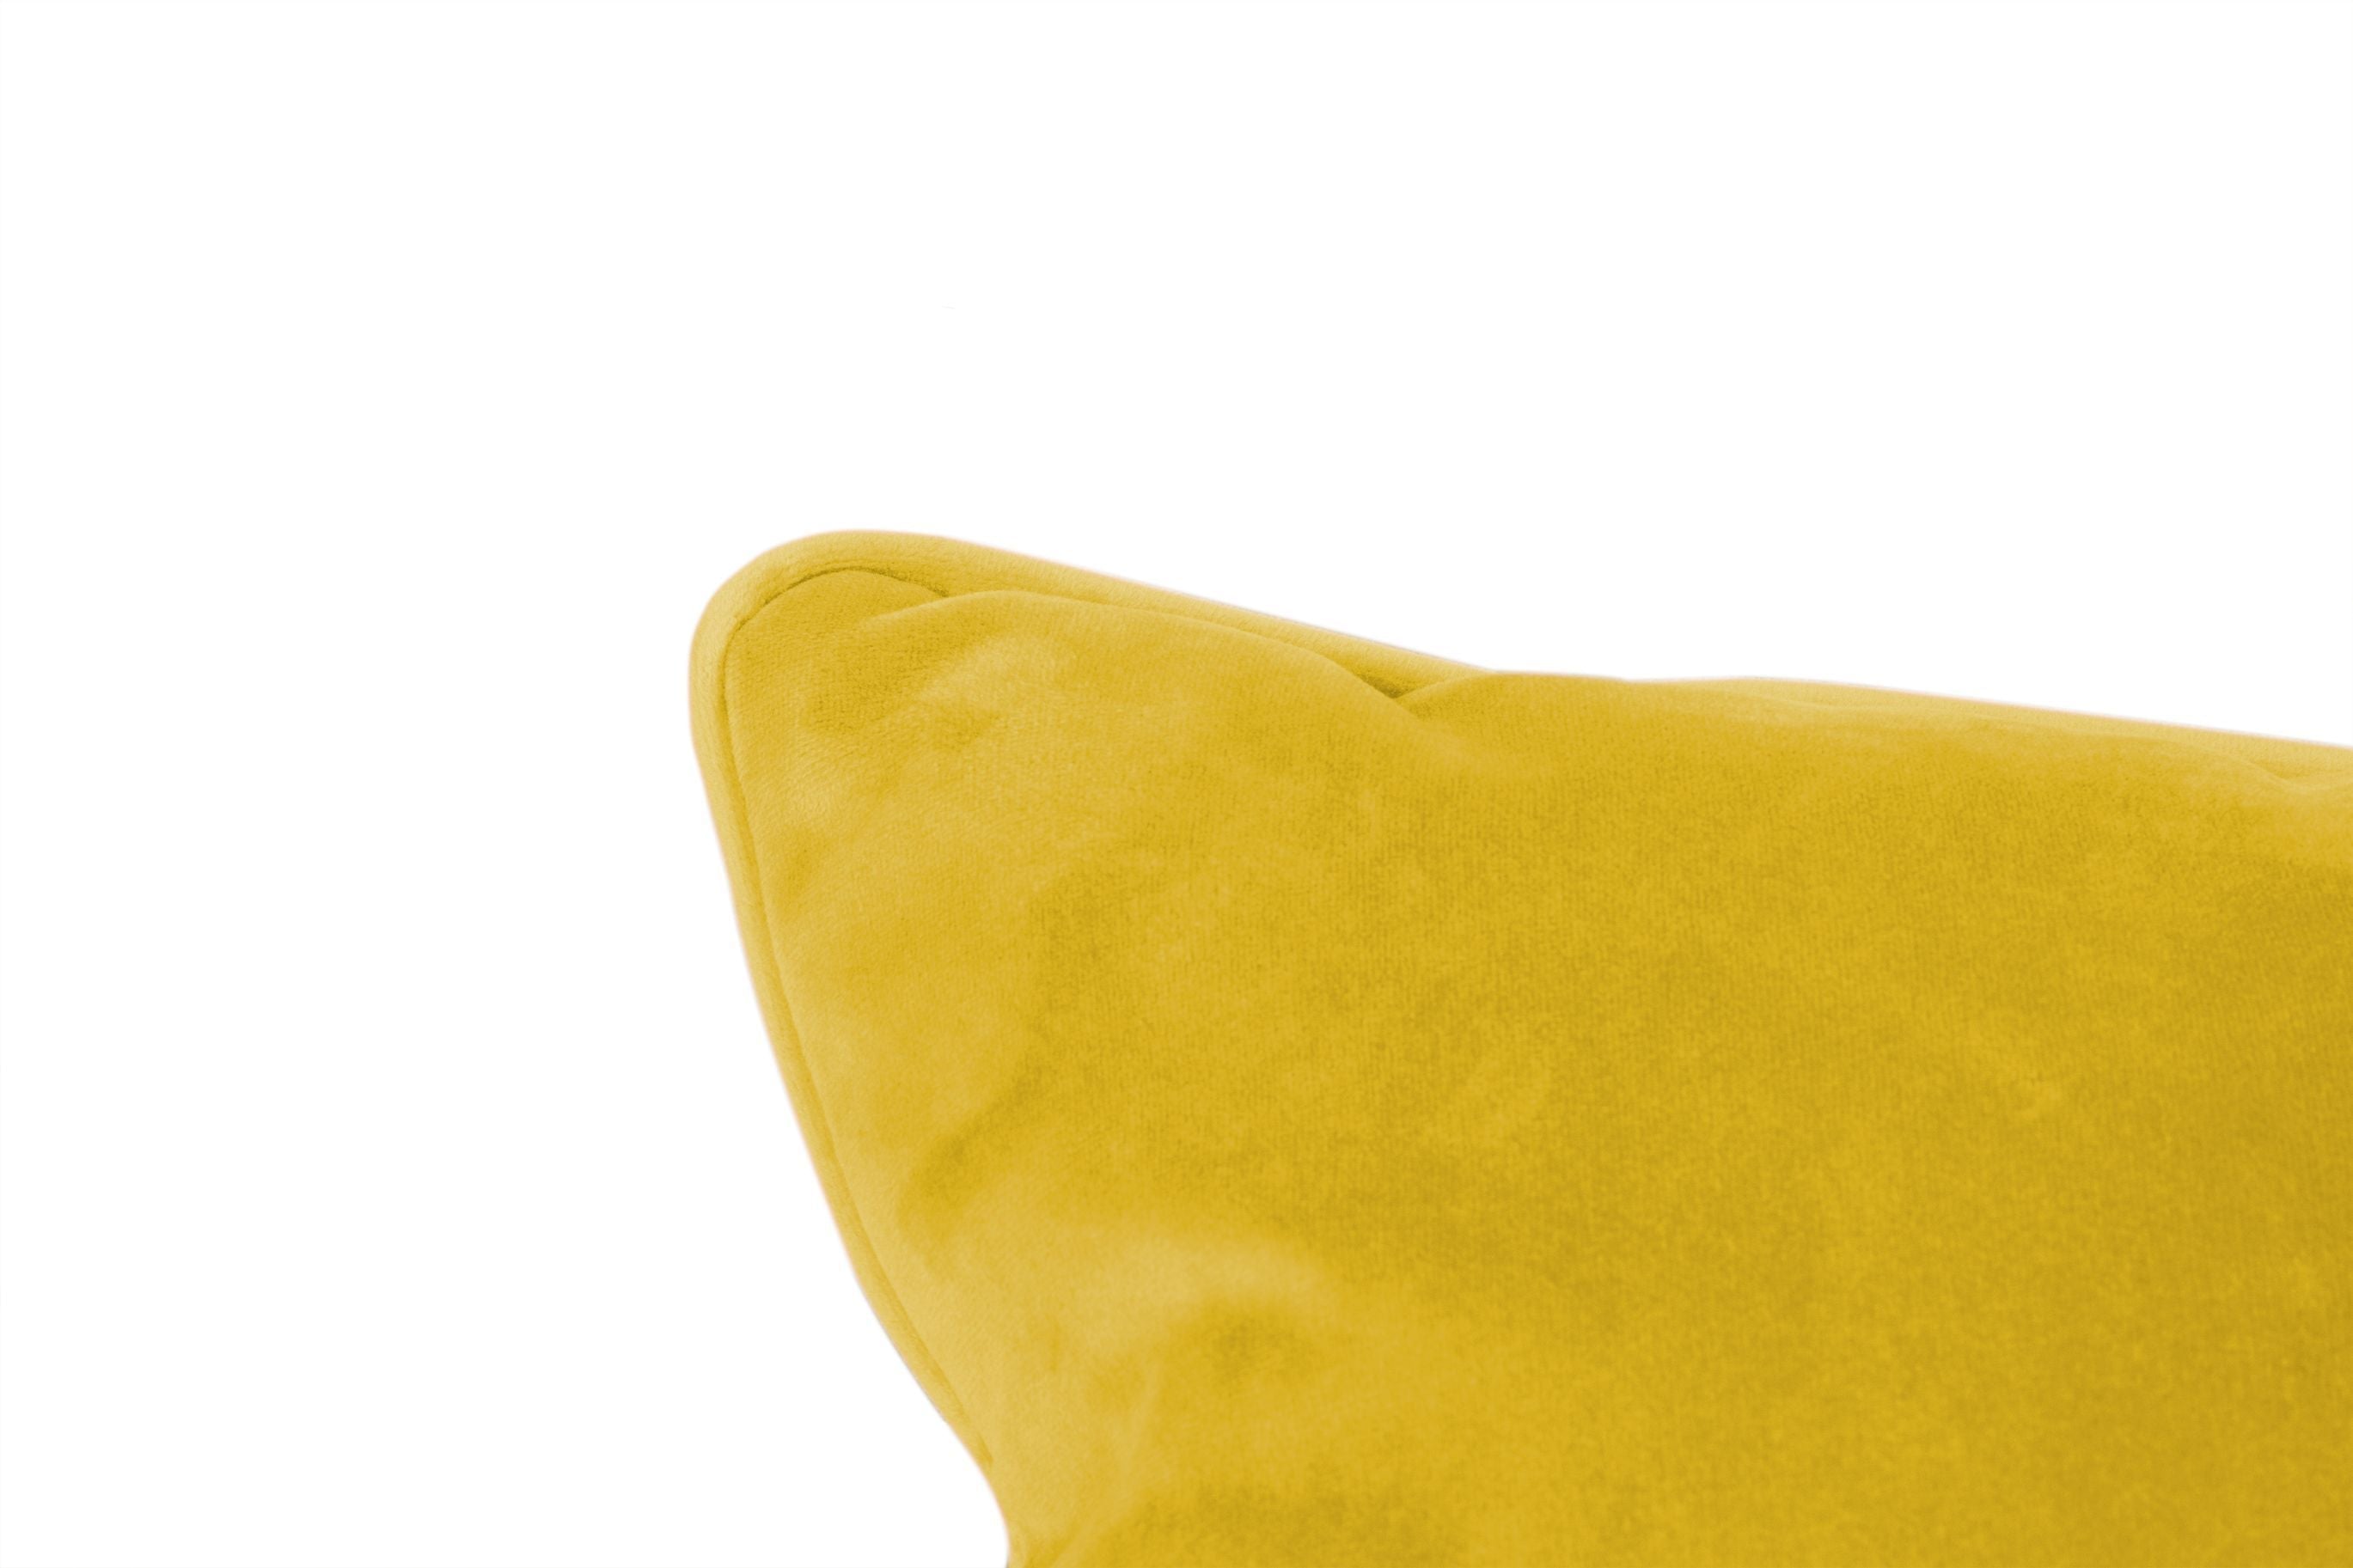 Fatboy Square Velvet Cushion Recycled 50x50 Cm, Gold Honey